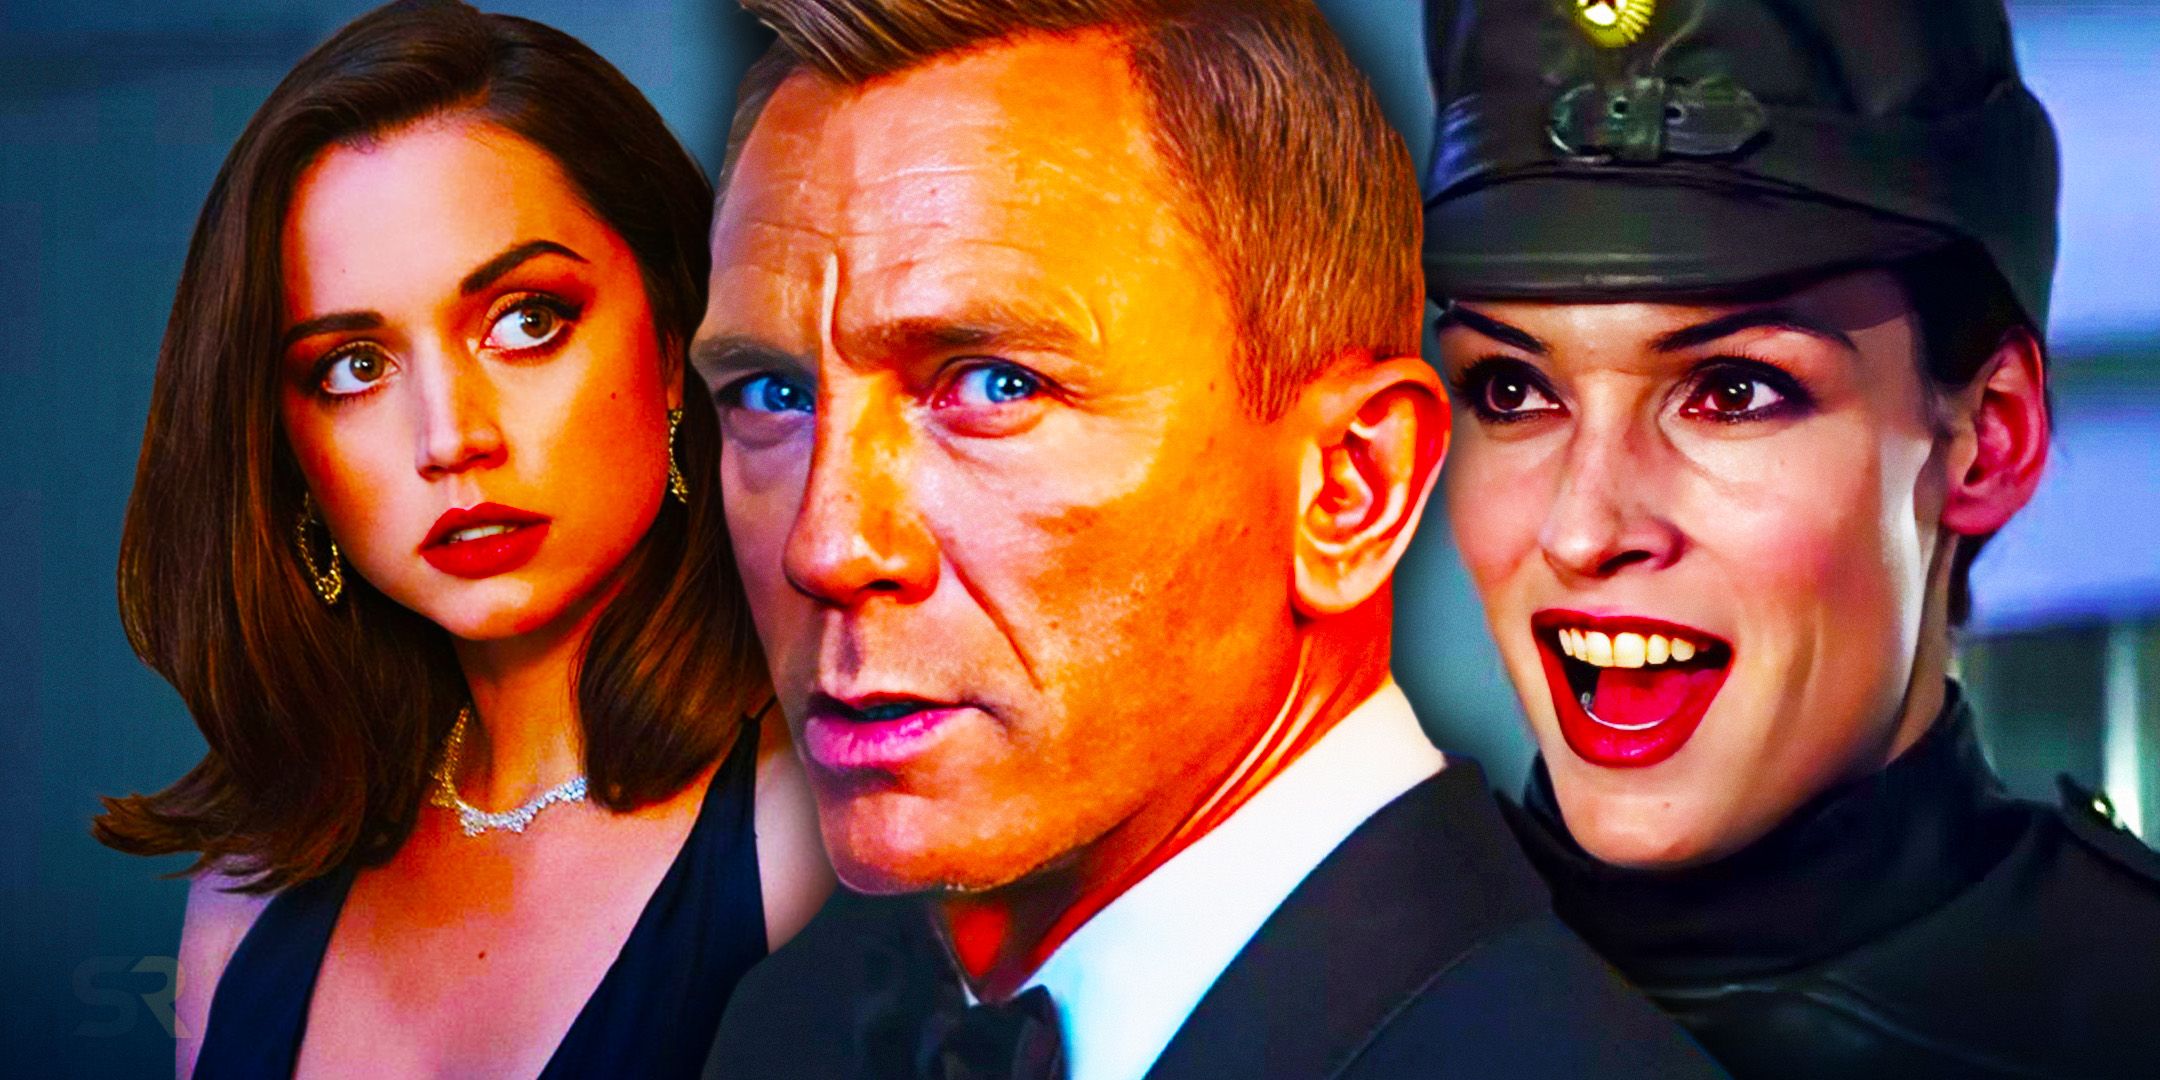 Daniel Craig as James Bond with Ana de Armas as Paloma and Famke Janssen as Xenia Onatopp